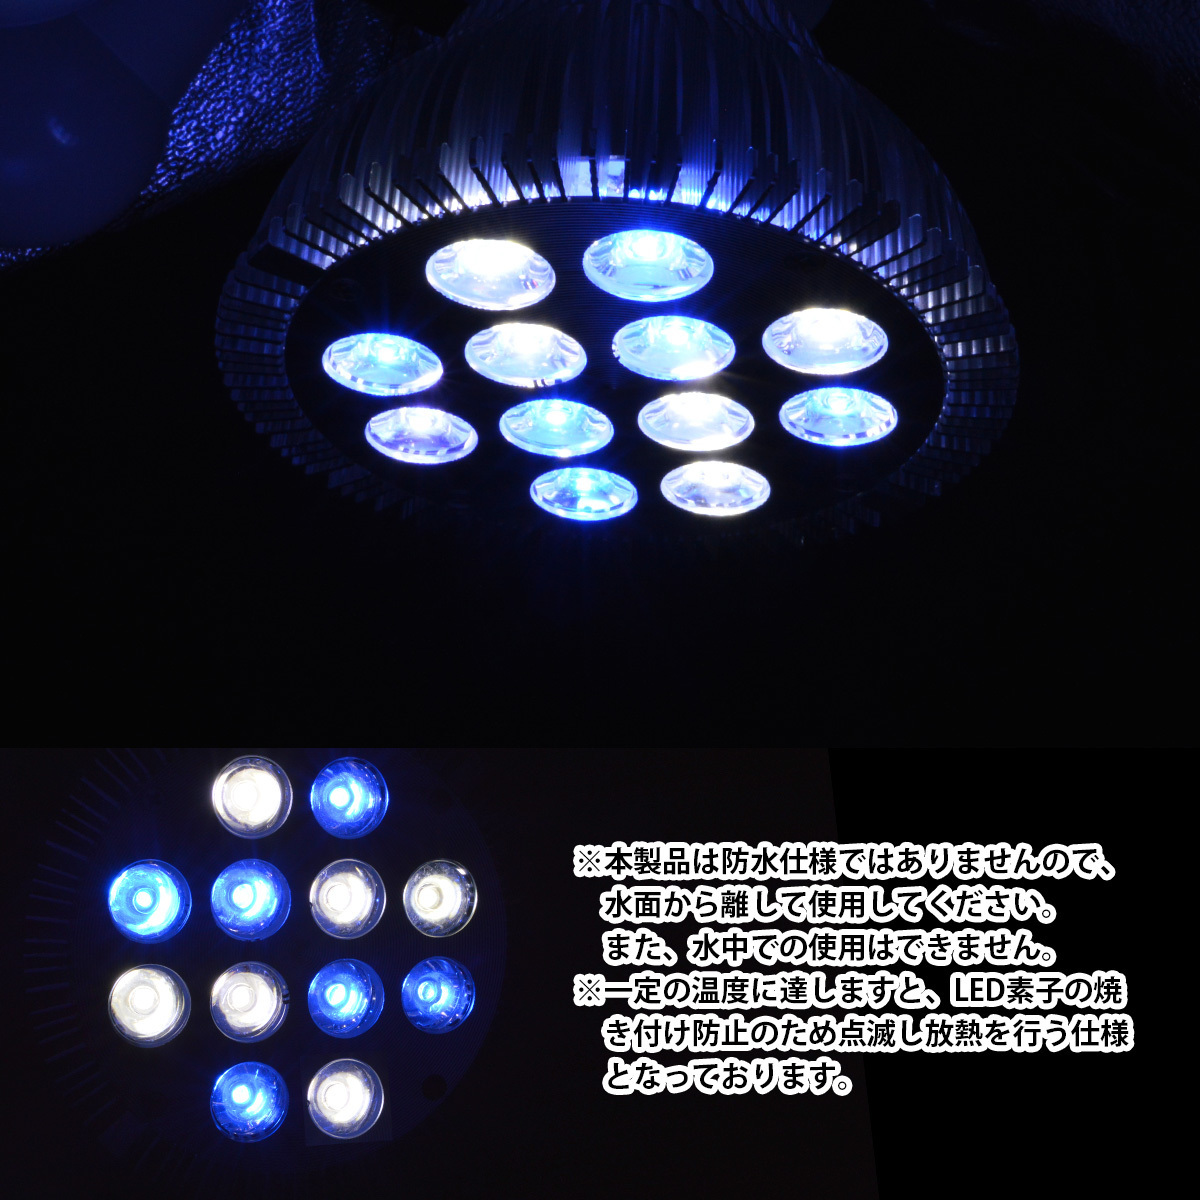 LED 電球 スポットライト 24W(2W×12)白6青6 水槽 照明 E26 水草 LEDスポットライト 電気 水草 サンゴ 熱帯魚 観賞魚 植物育成_画像4